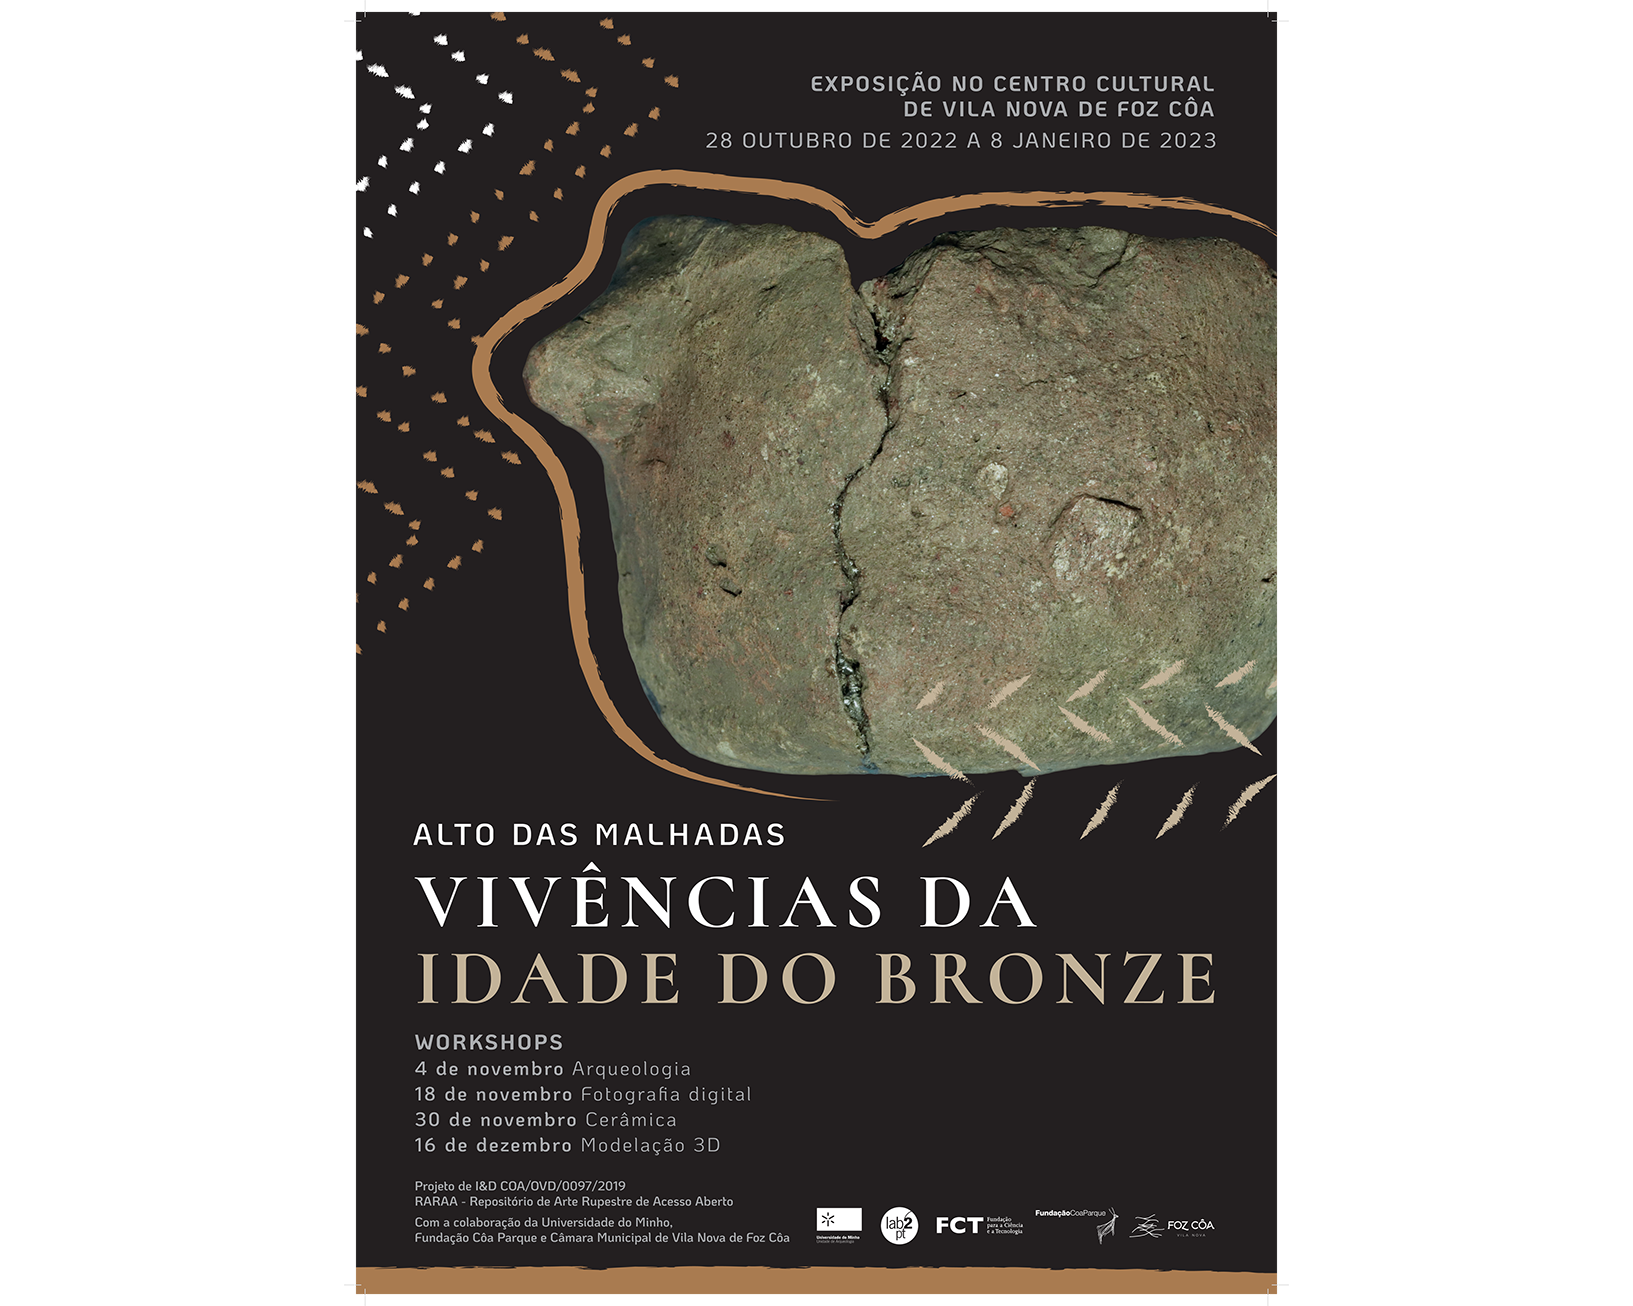 Exhibition “Alto das Malhadas – Experiences from the Bronze Age” | Workshops image